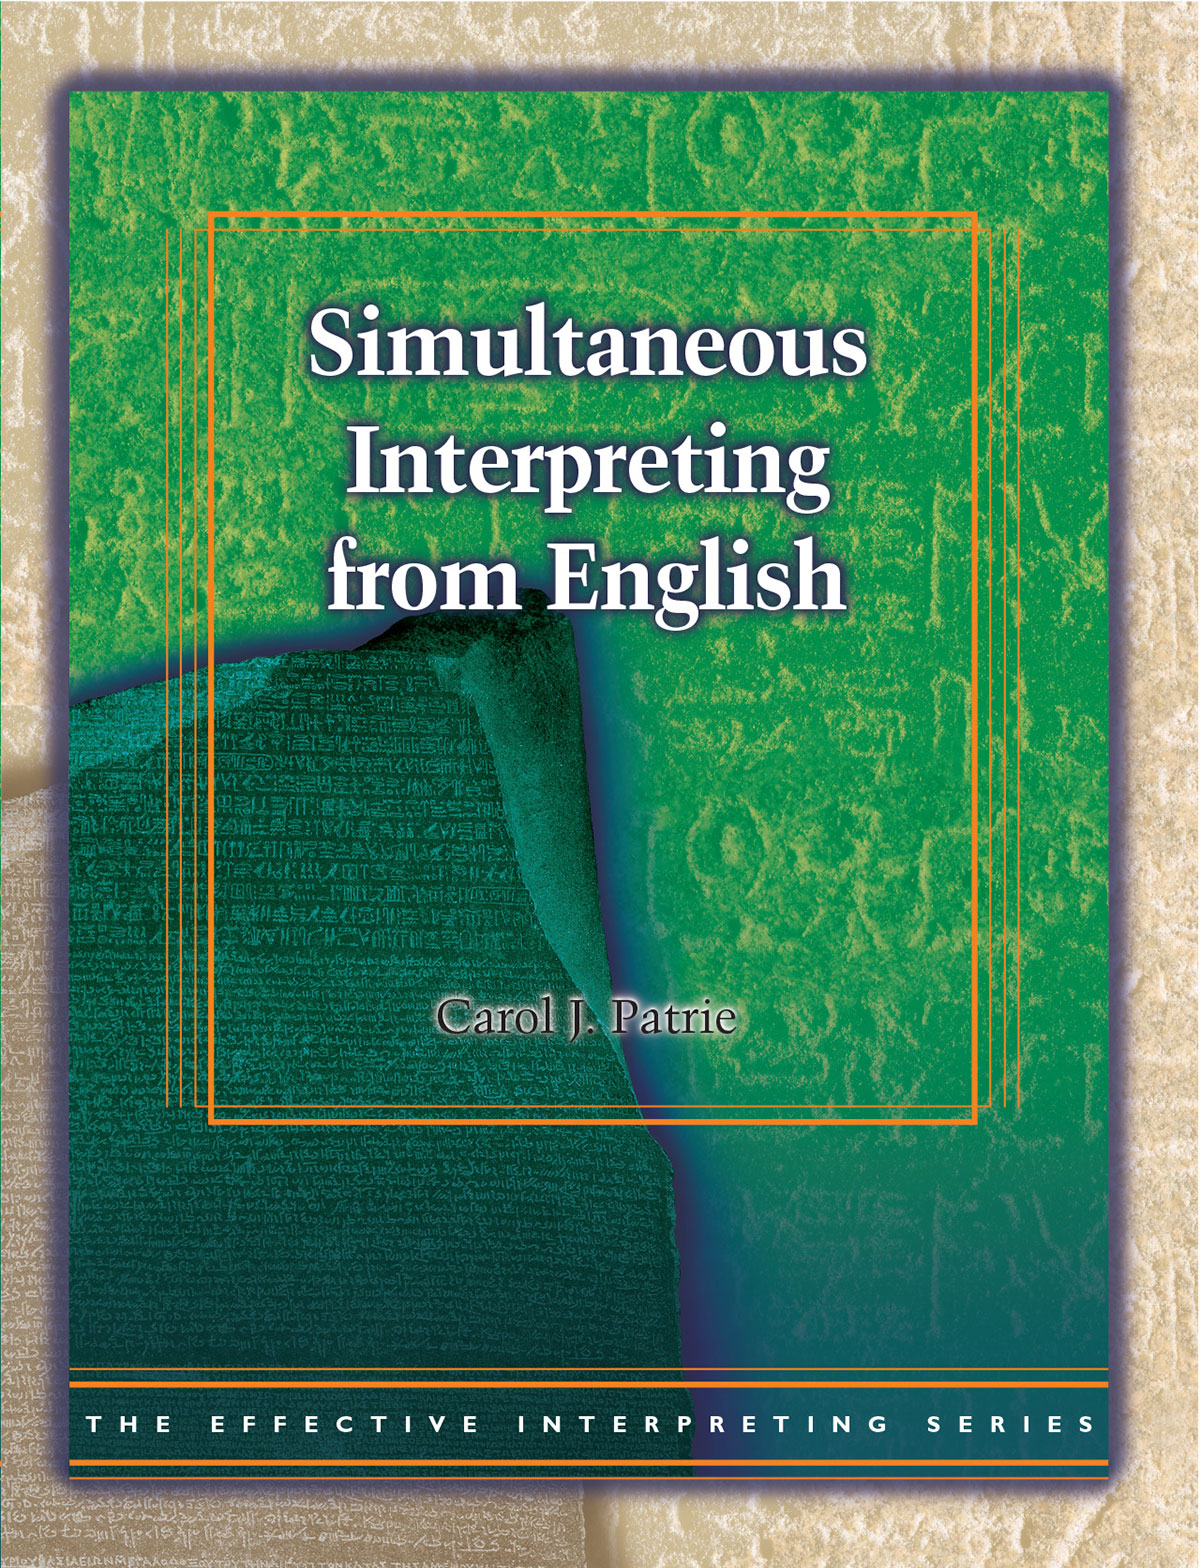 The Effective Interpreting Series: Simultaneous Interpreting from English - Study Set